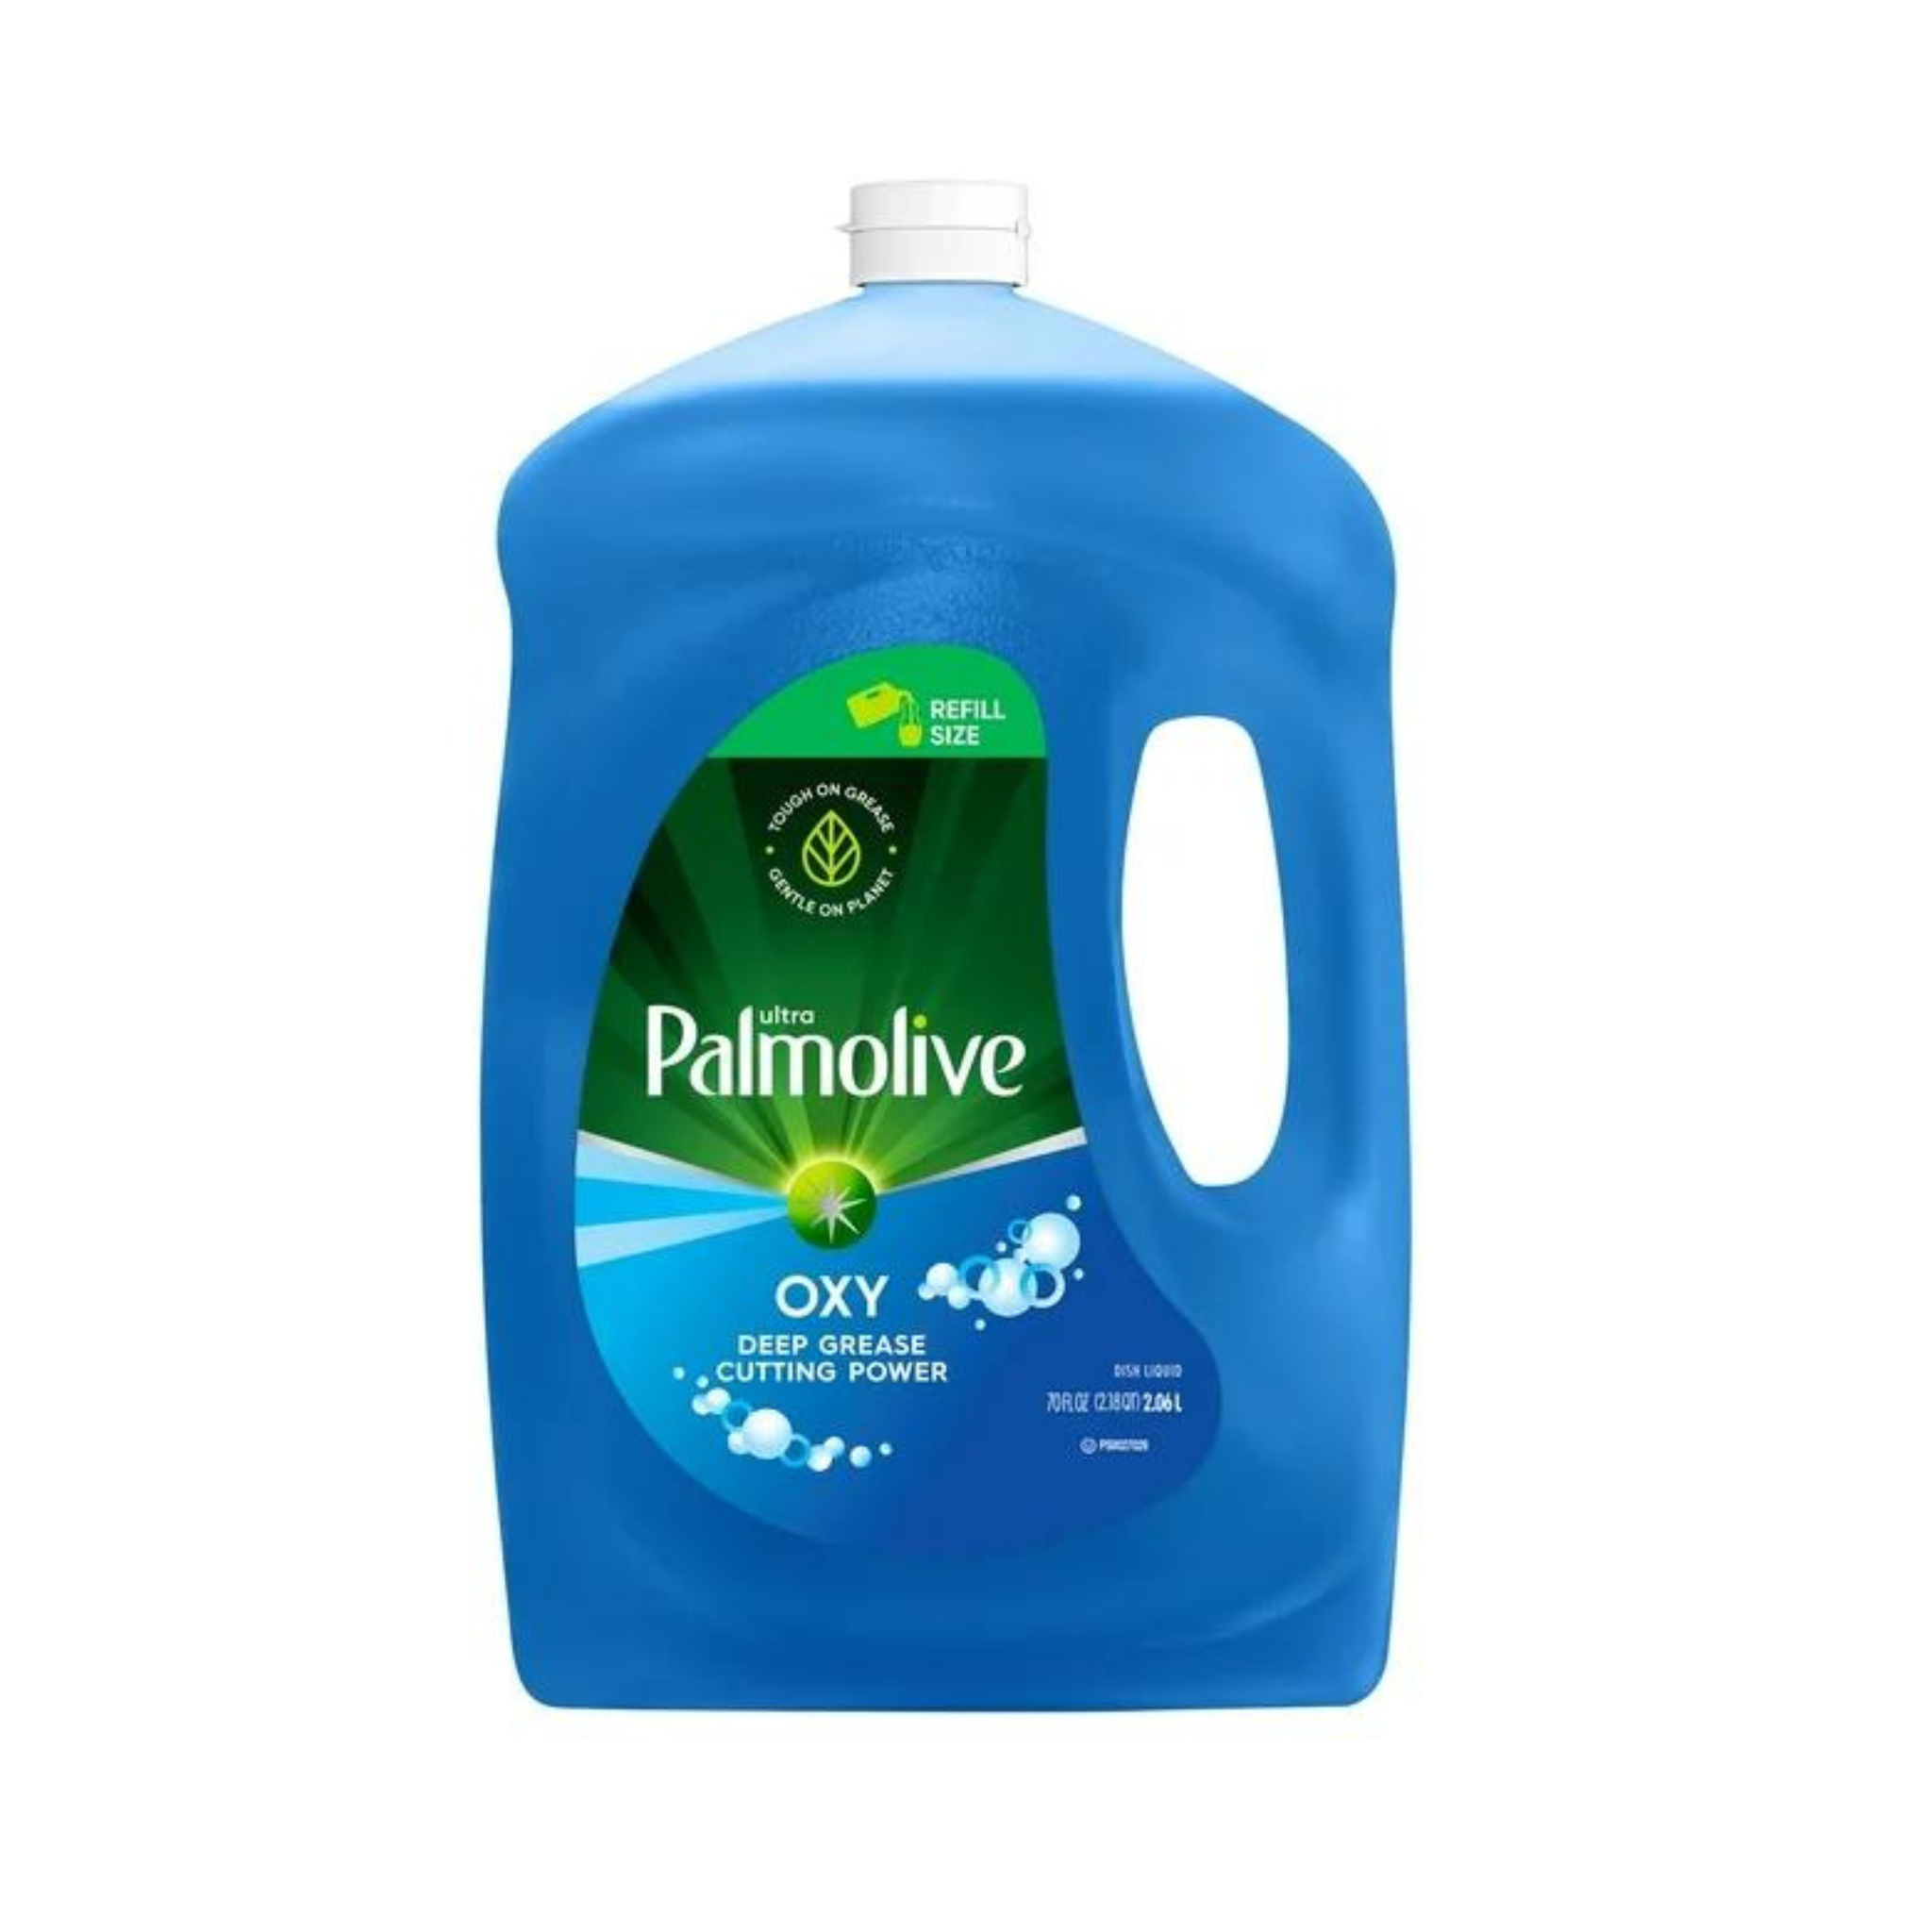 70-Oz Palmolive Ultra Oxy Power Degreaser Liquid Dish Soap + $2 Walmart Cash